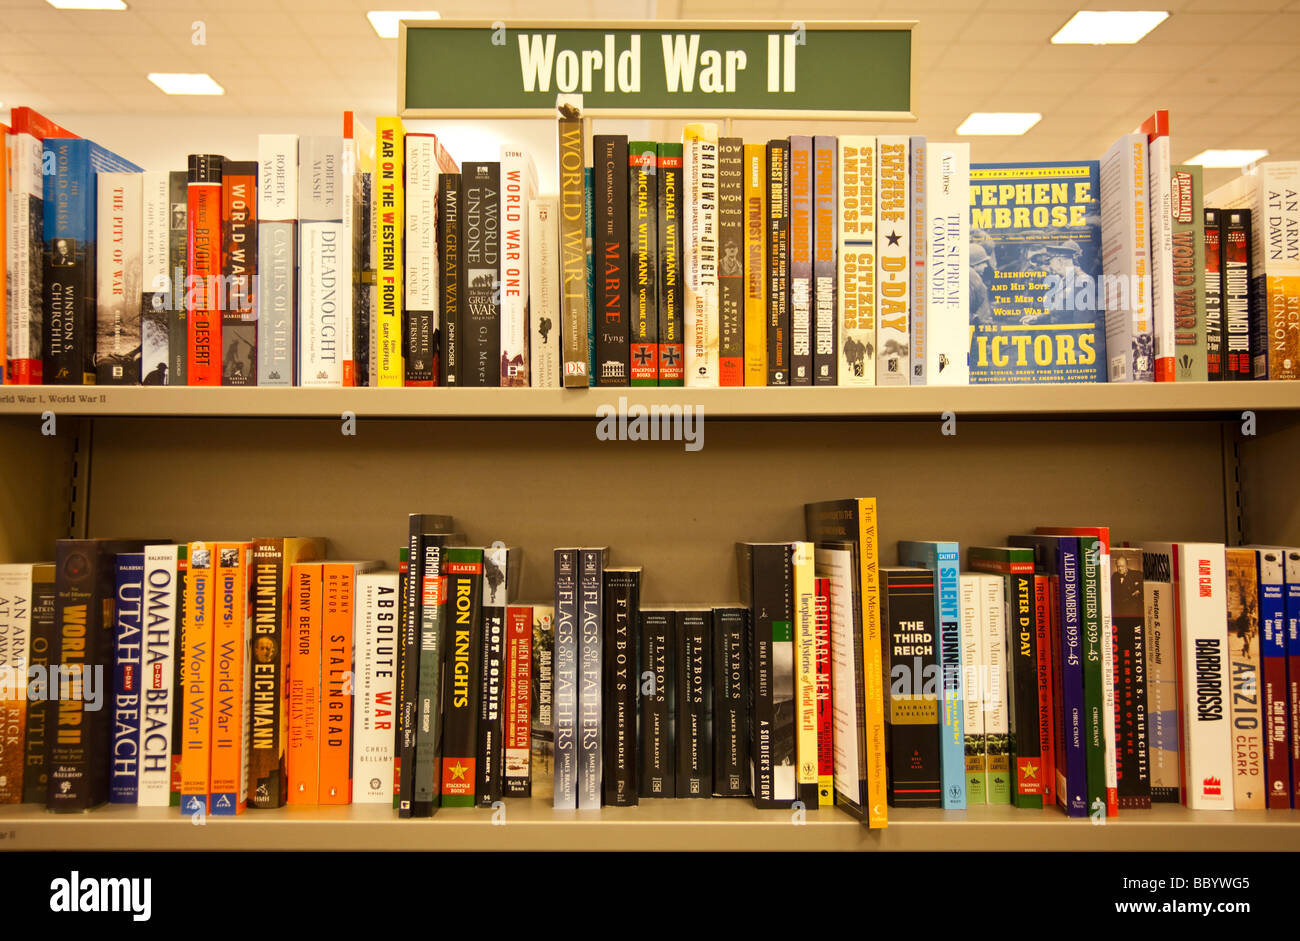 World War II book shelves, Barnes and Noble, USA Stock Photo